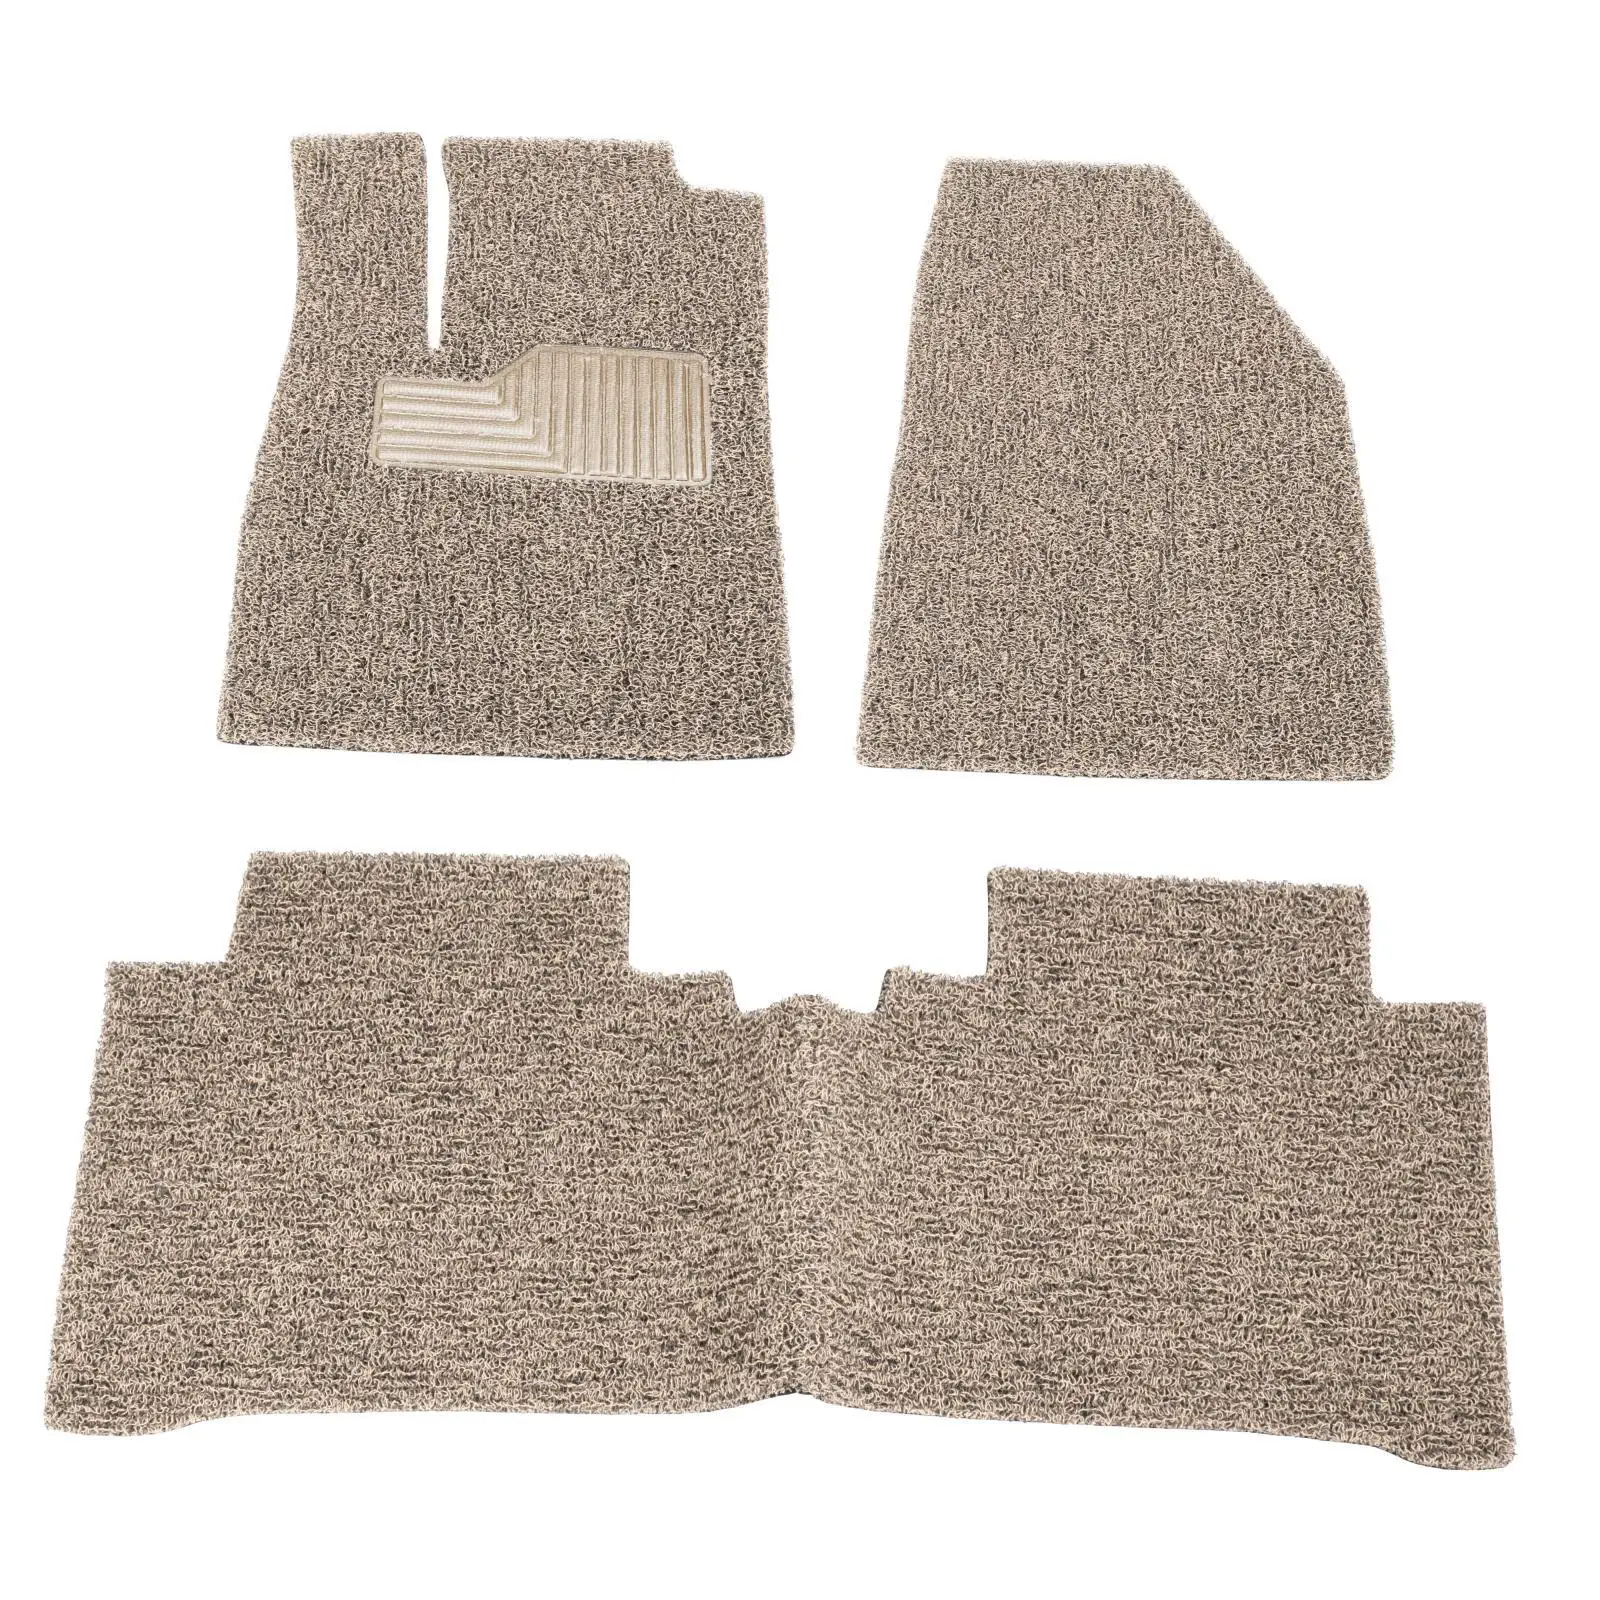 3x Automotive Floor Mats Portable Comfortable Carpets Footpads Professional PVC Convenient for Byd Yuan Plus Atto 3 21-23